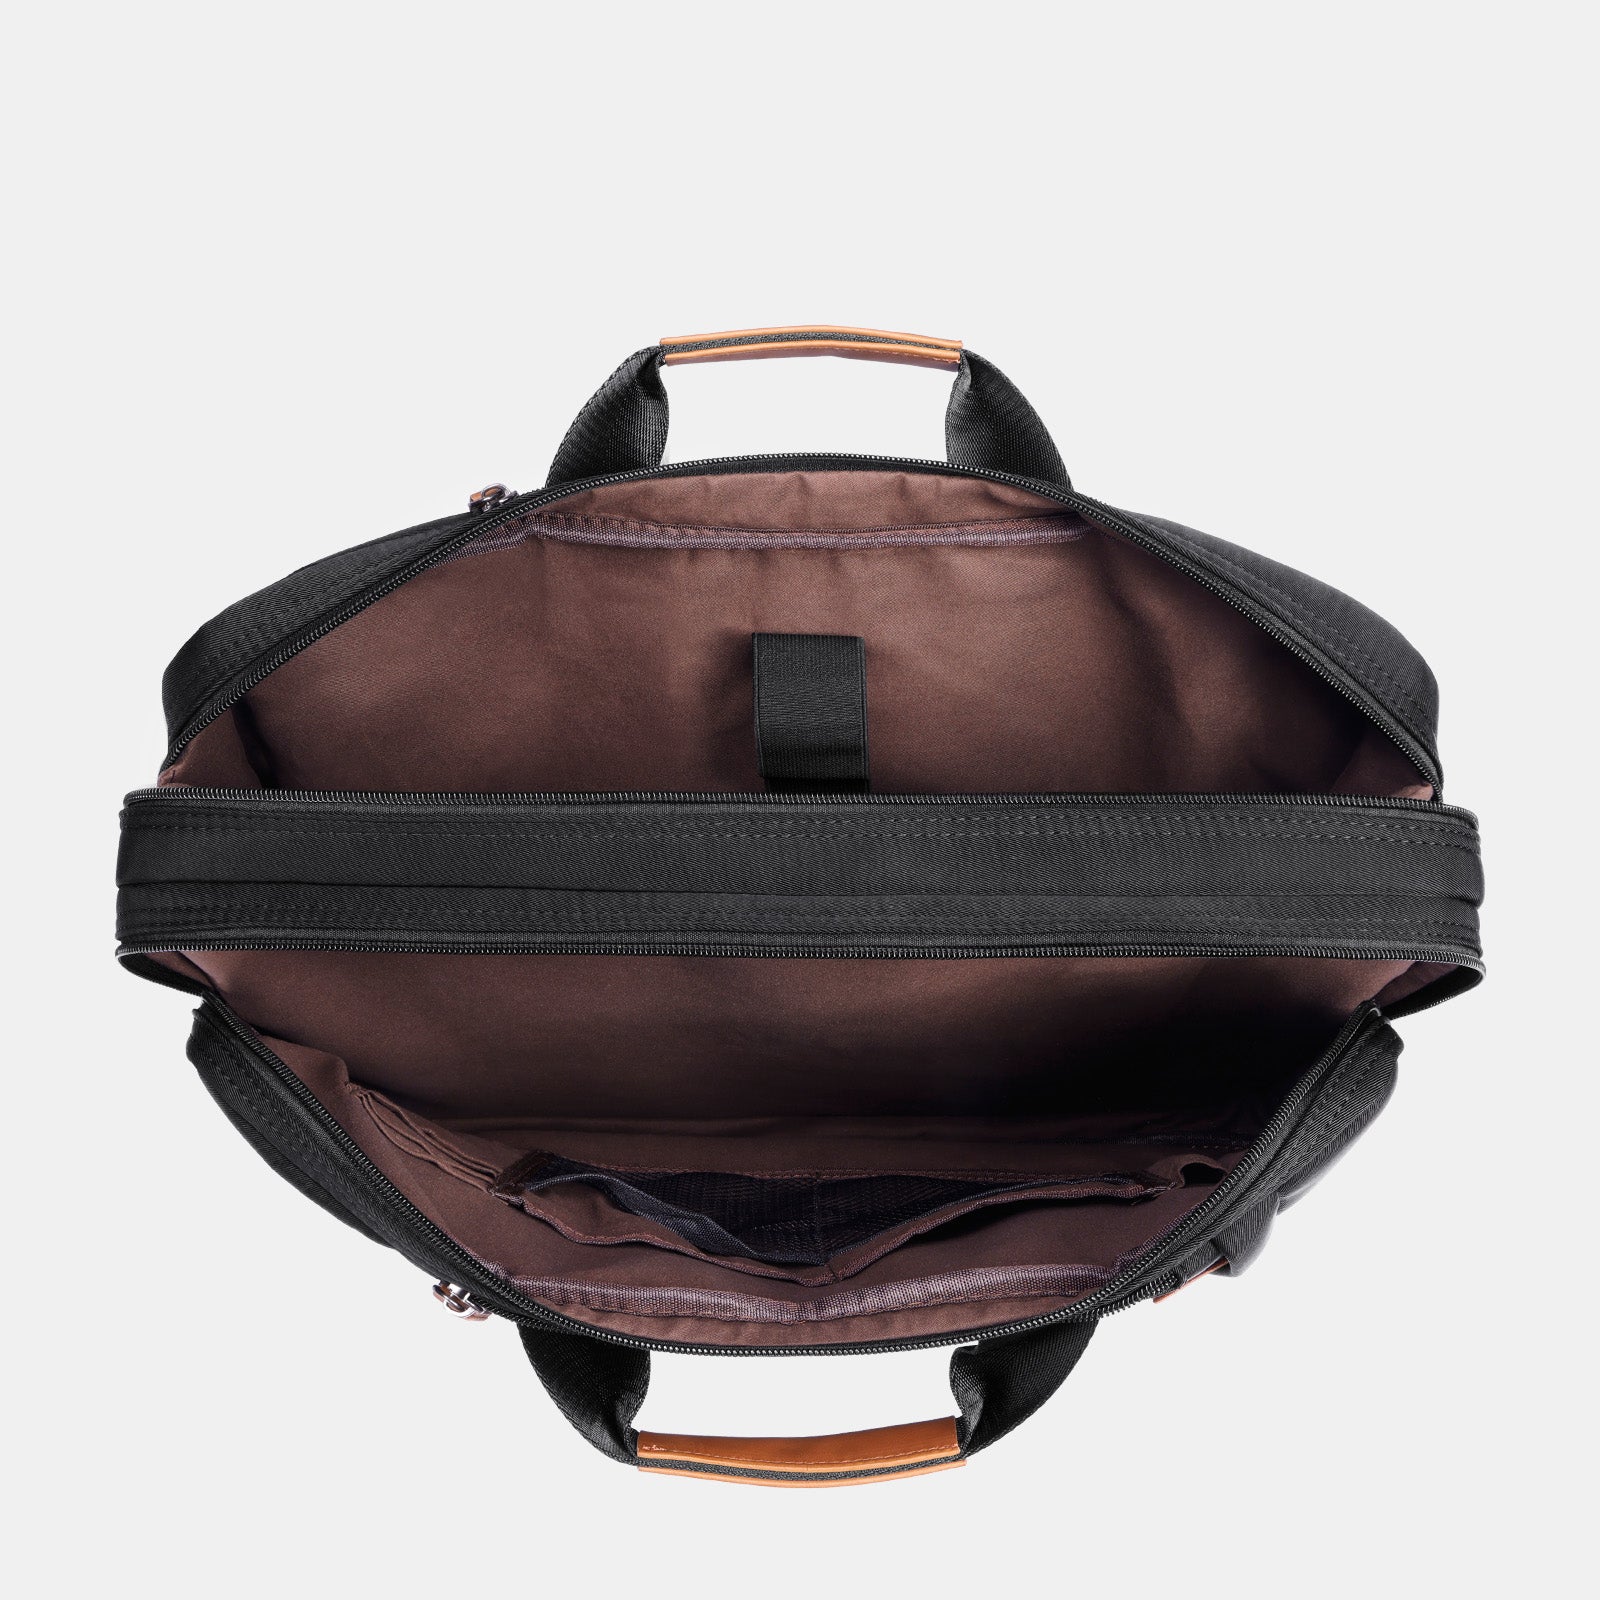 Estarer Nylon 3Way Convertible Backpack Briefcase